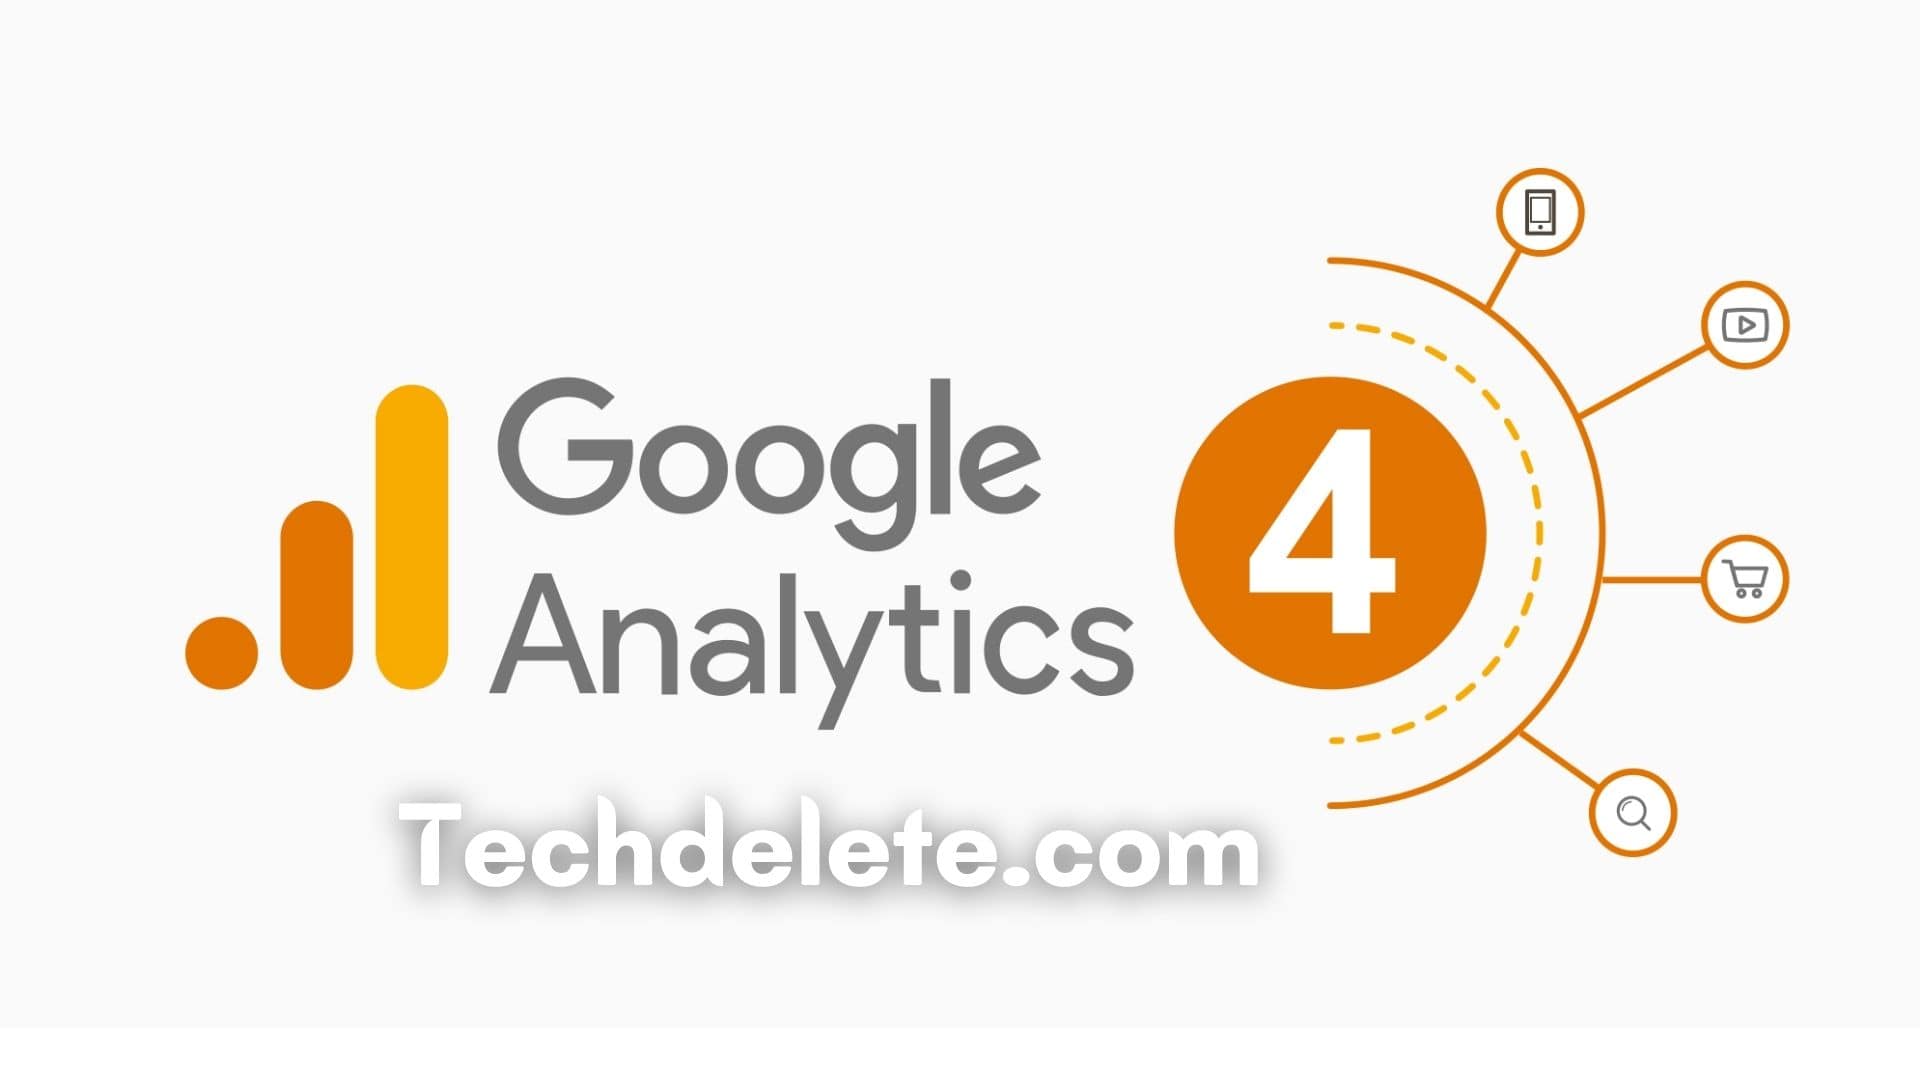 Google Analytics 4 Benefits